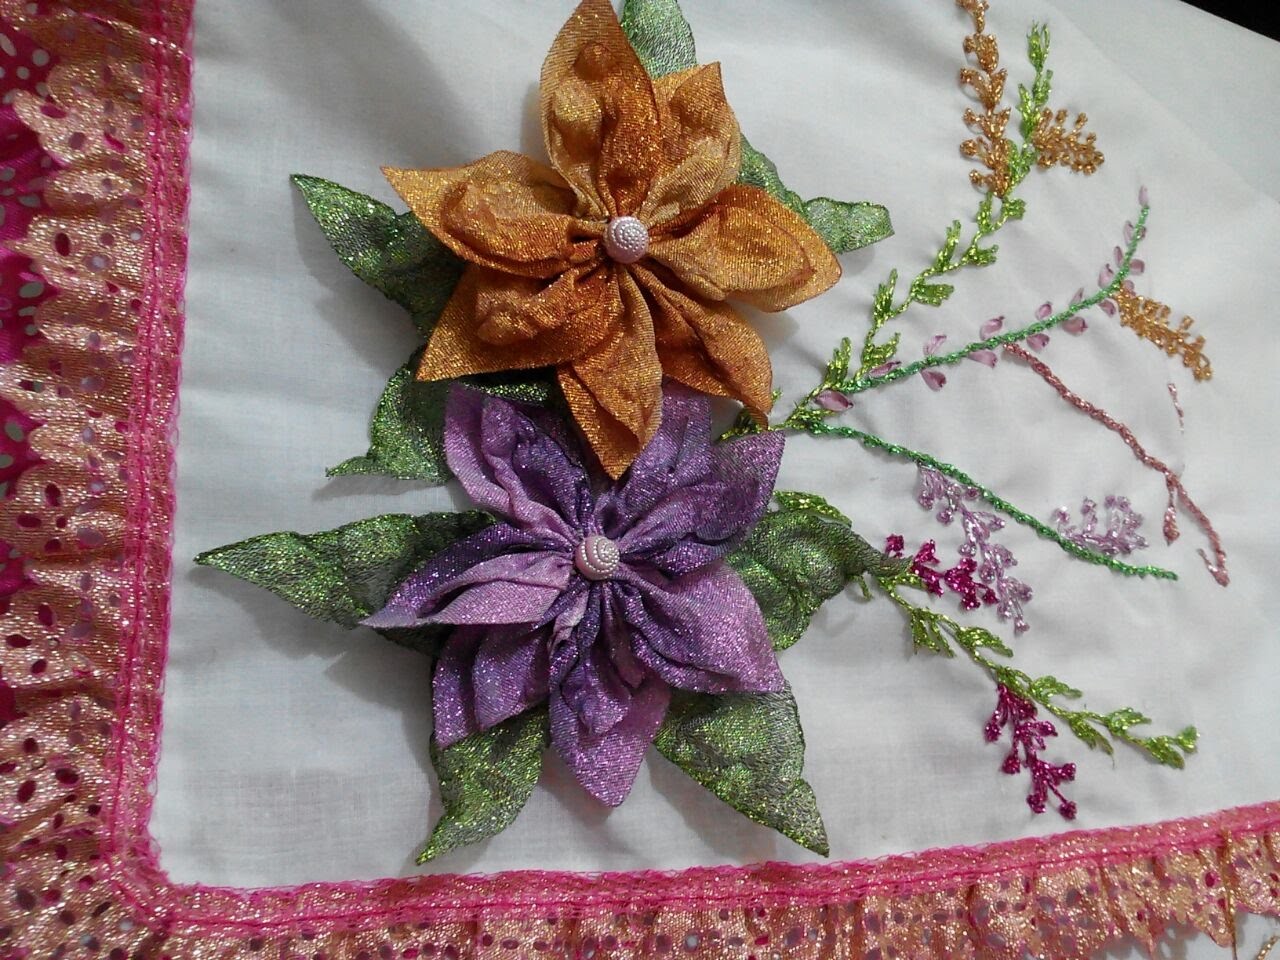 PUNTADA DECORATIVA EN UNA SERVILLETA (decorative stitch on a napkin)